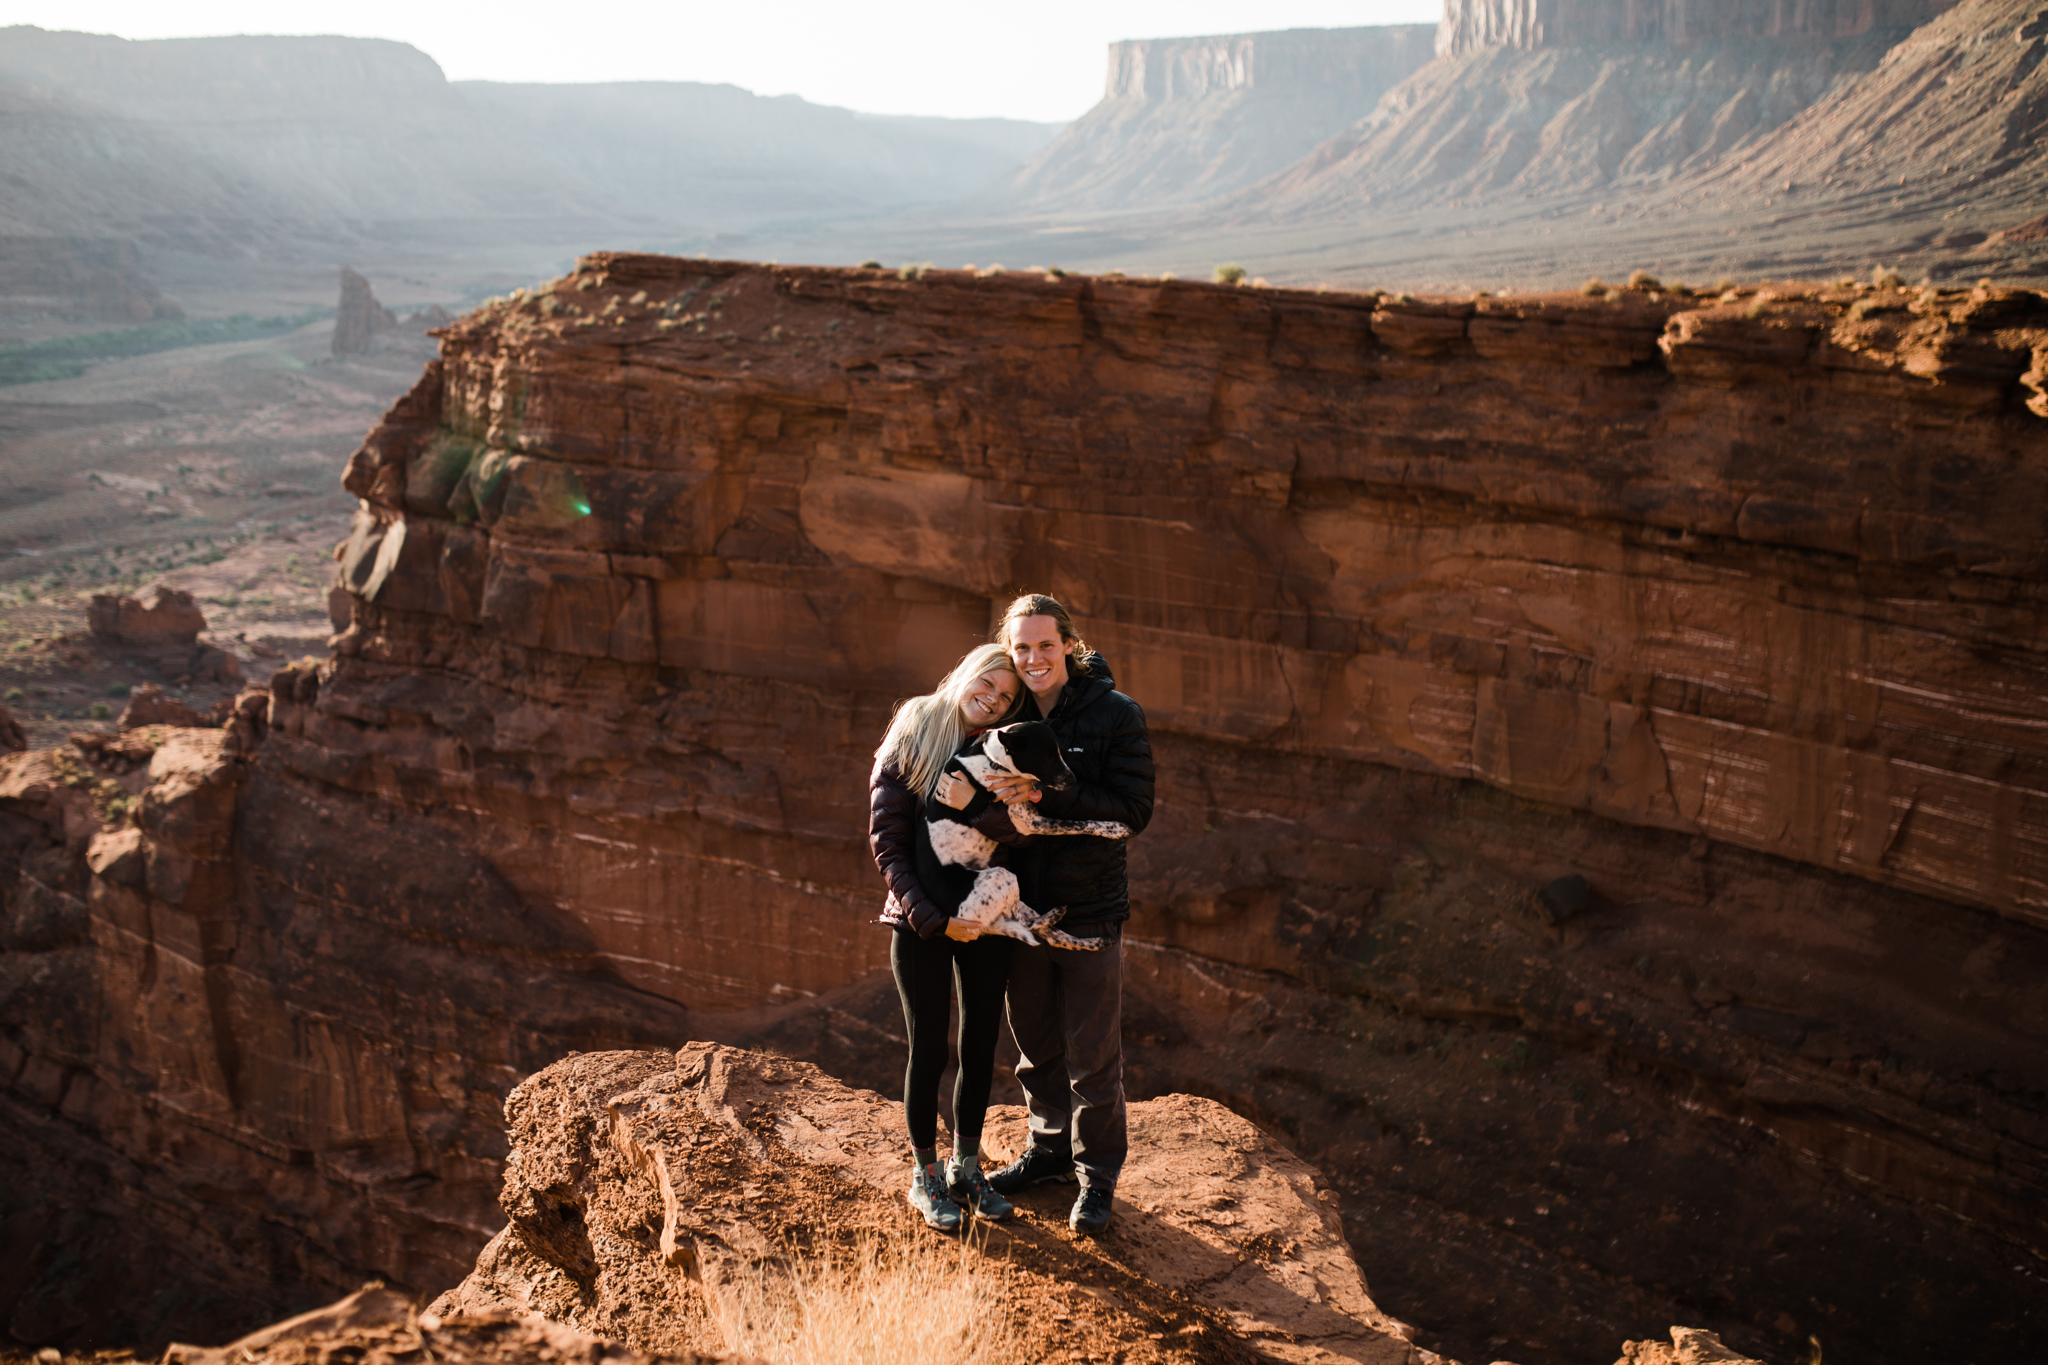 van life in moab utah | utah and california adventure elopement photographers | the hearnes adventure photography | www.thehearnes.com